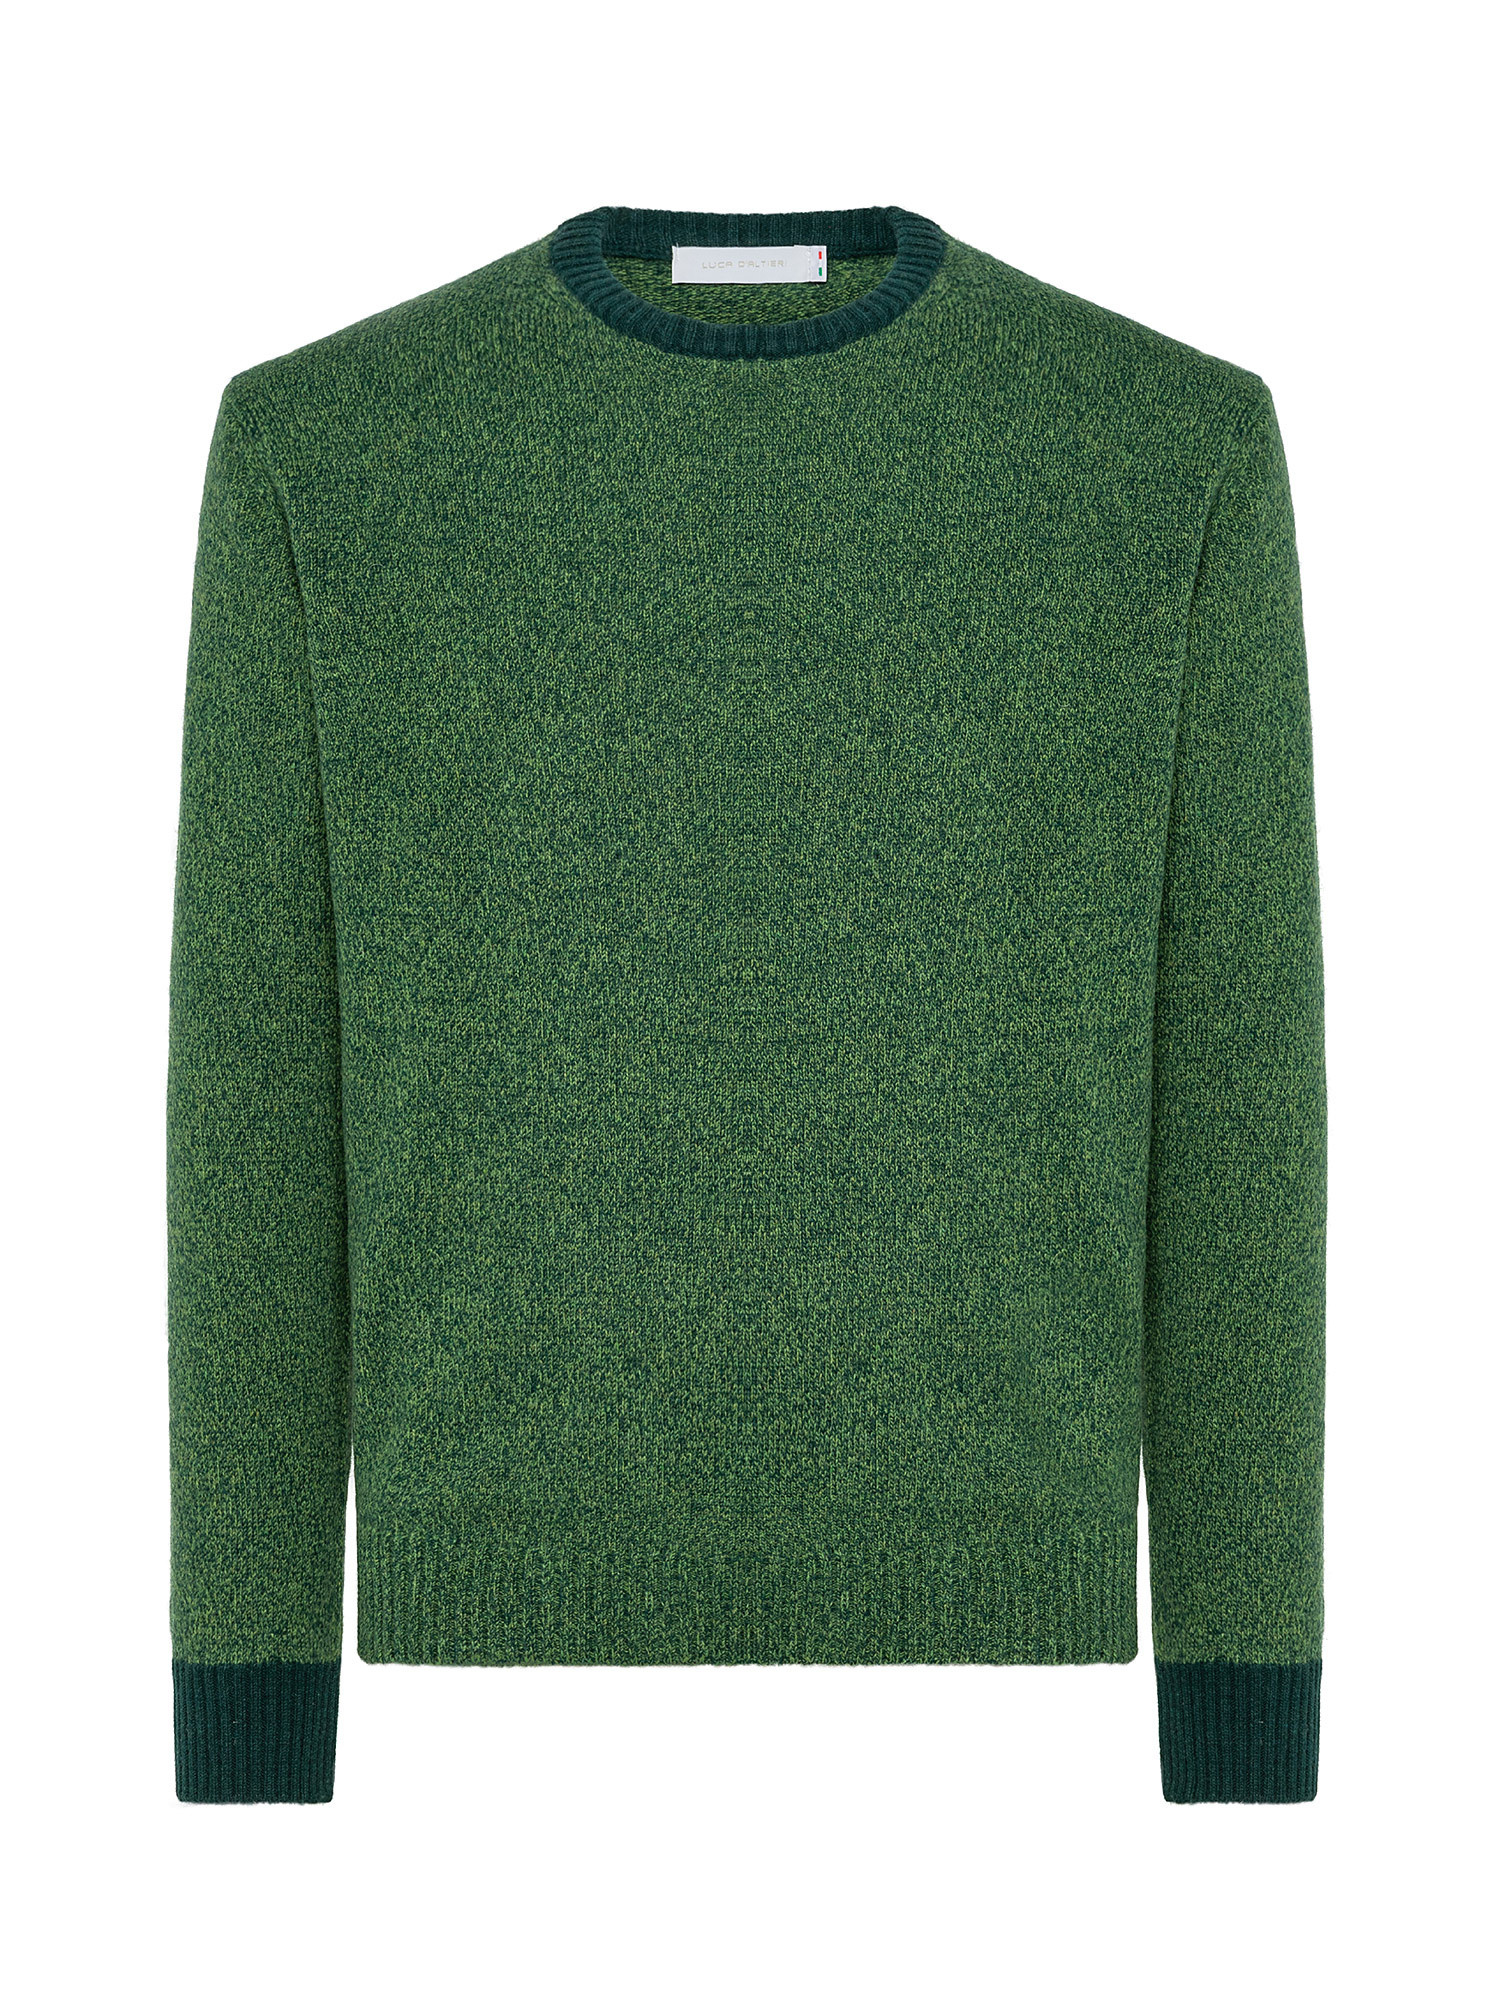 Crewneck pullover, Green, large image number 0